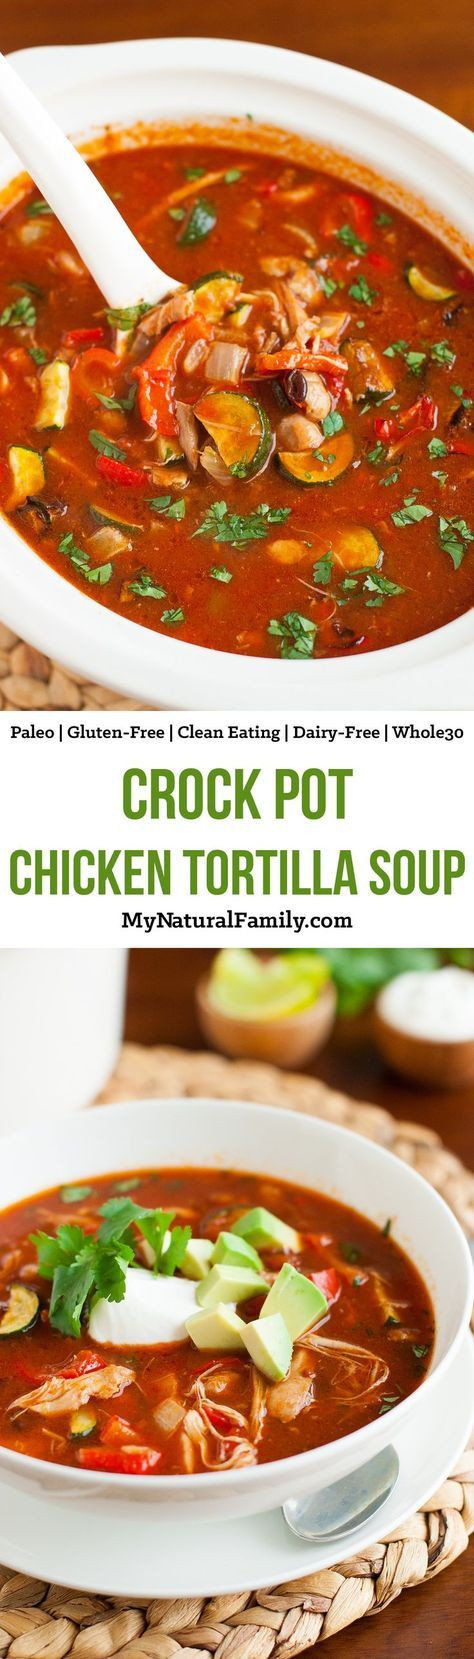 Gluten Free Dairy Free Soup Recipes
 Gluten Free Crock Pot Chicken Tortilla Soup